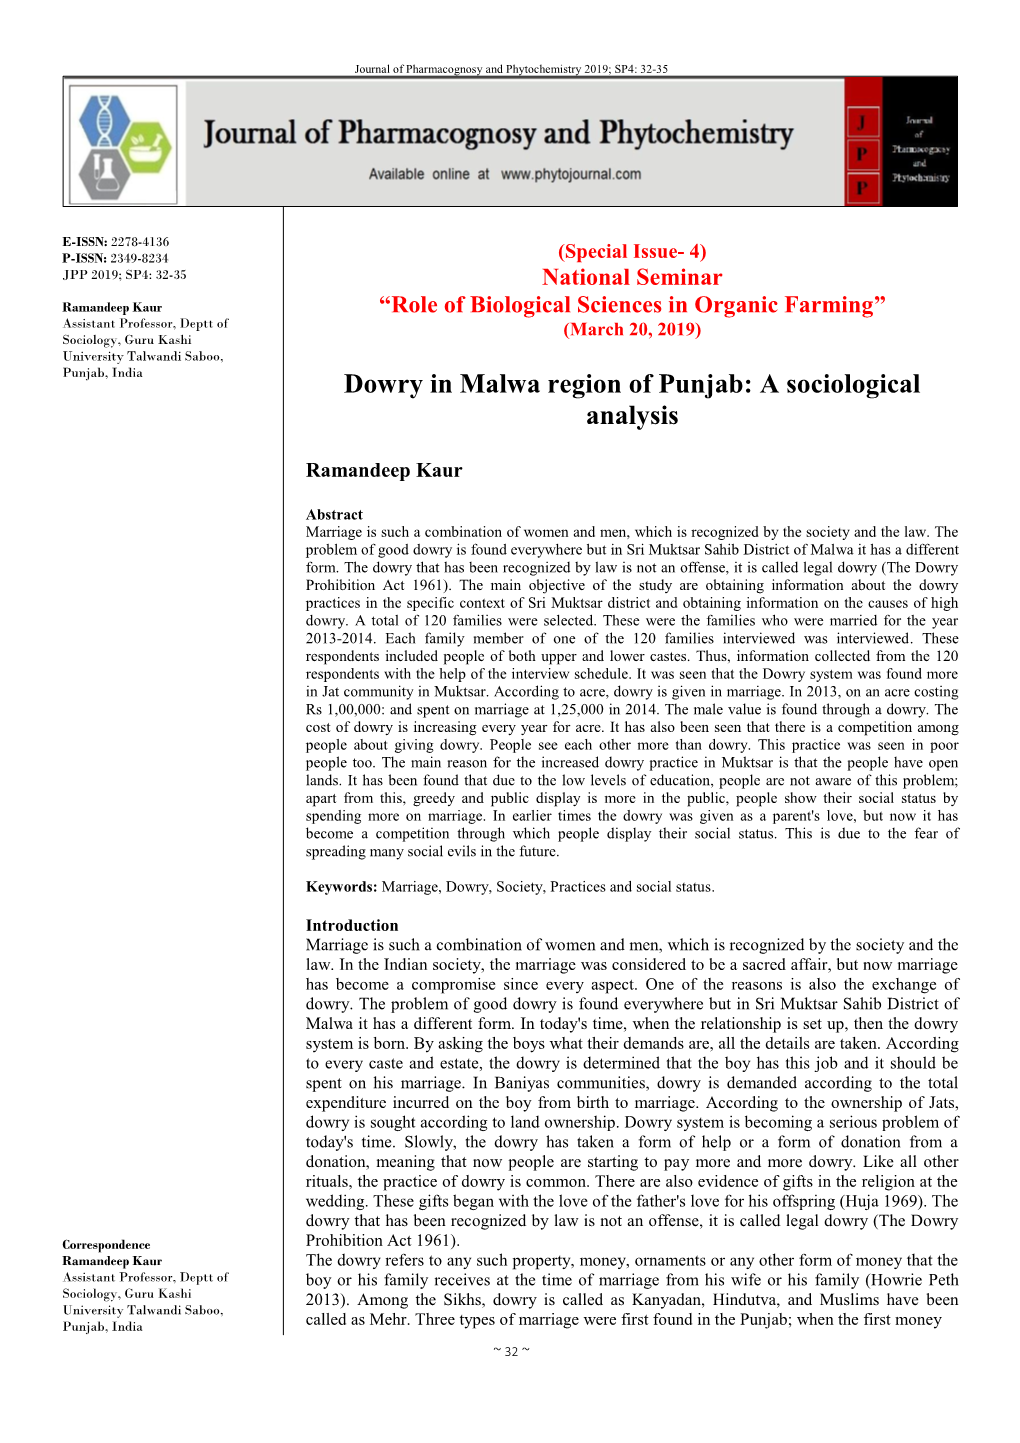 Dowry in Malwa Region of Punjab: a Sociological Analysis